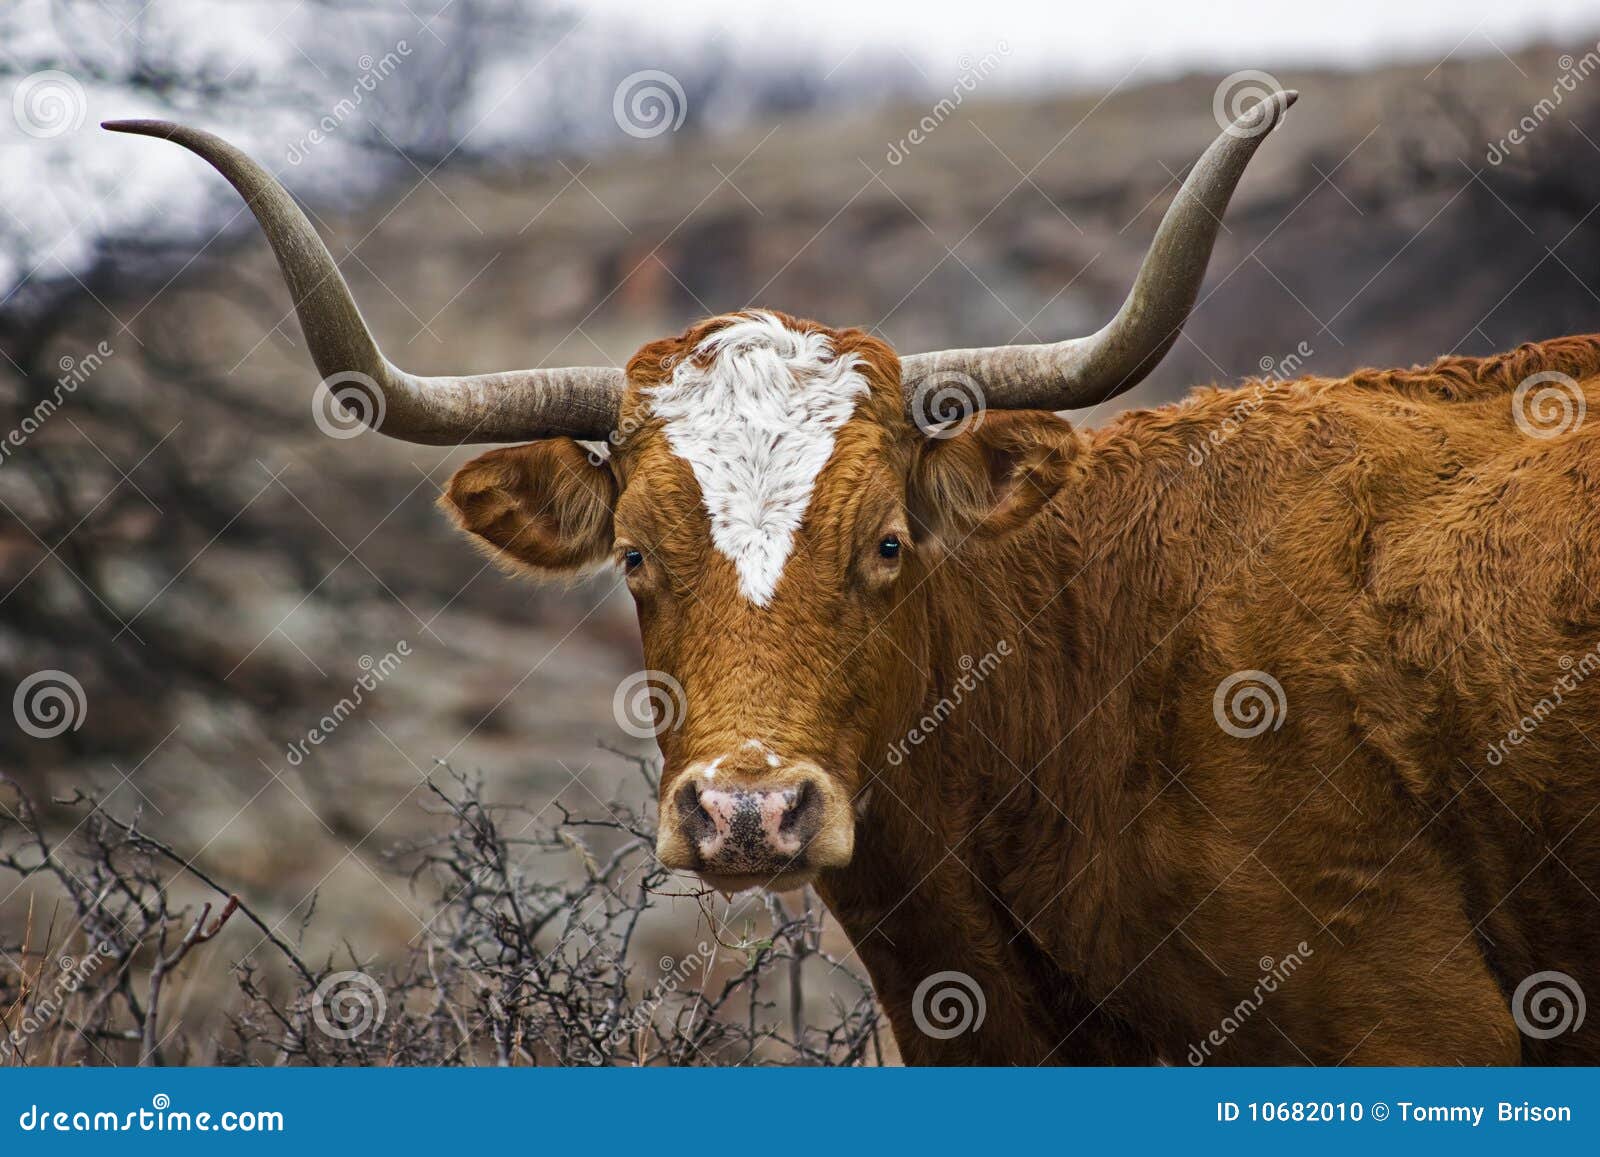 portrait of a texas longhorn